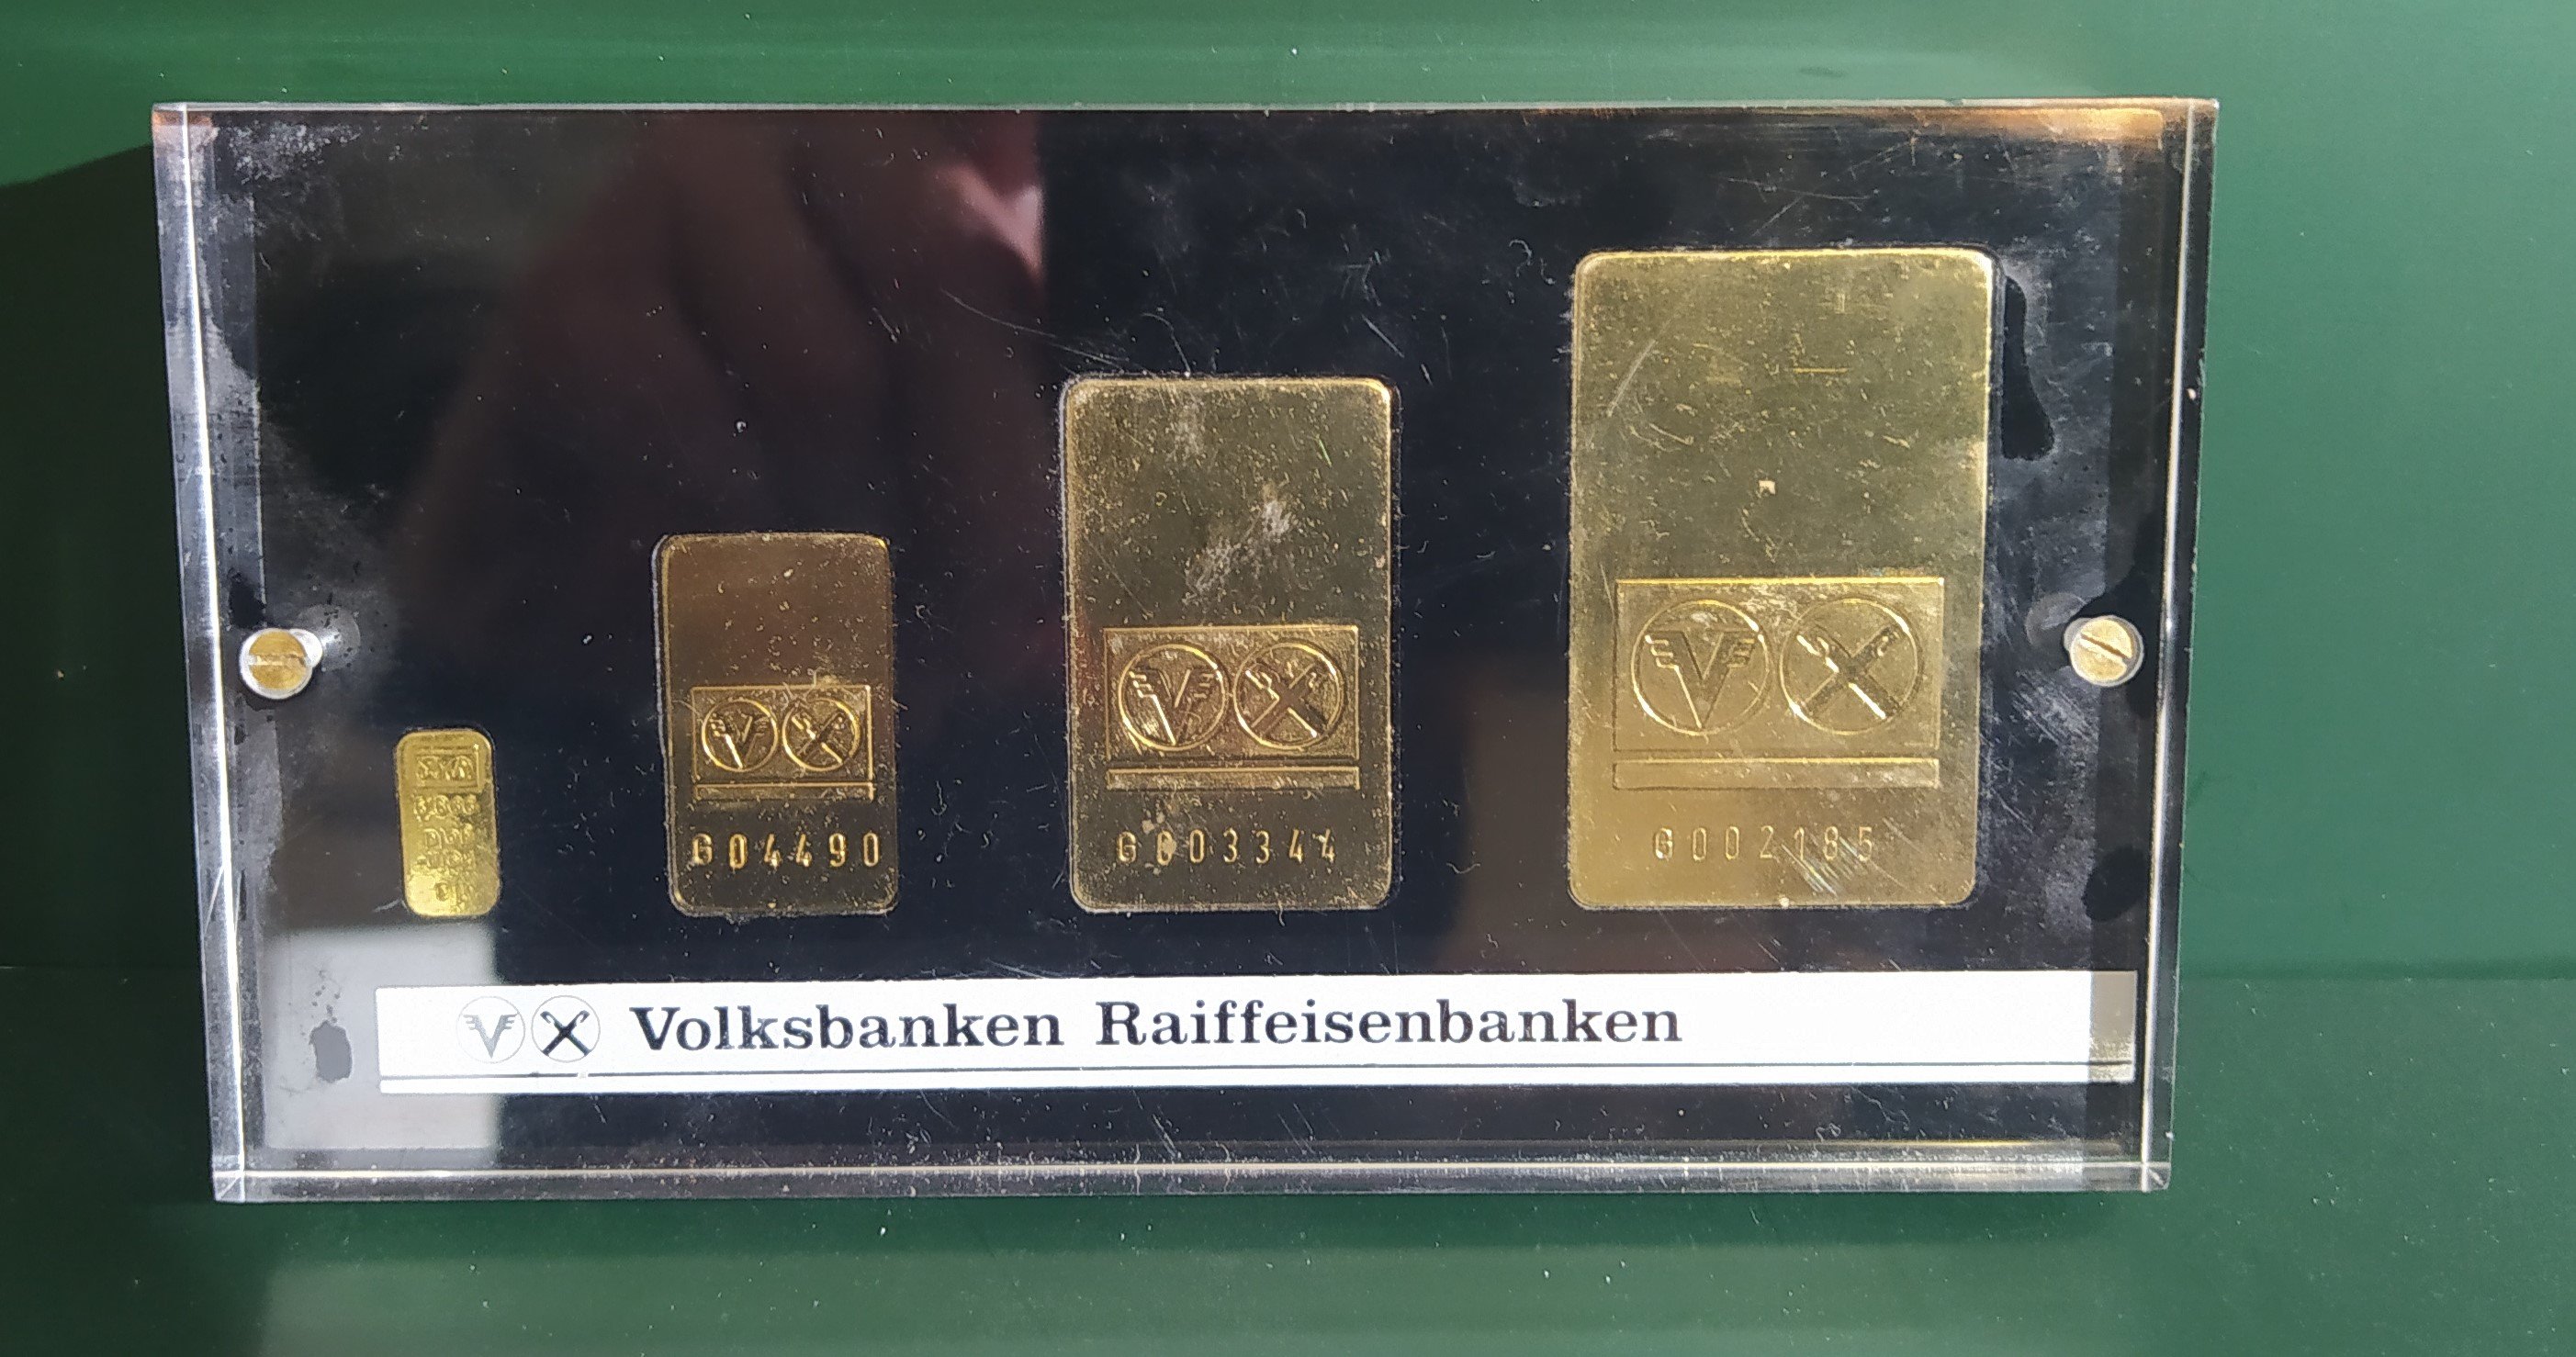 Gold - Attrappen für Werbung (HKK CC BY-NC-SA)